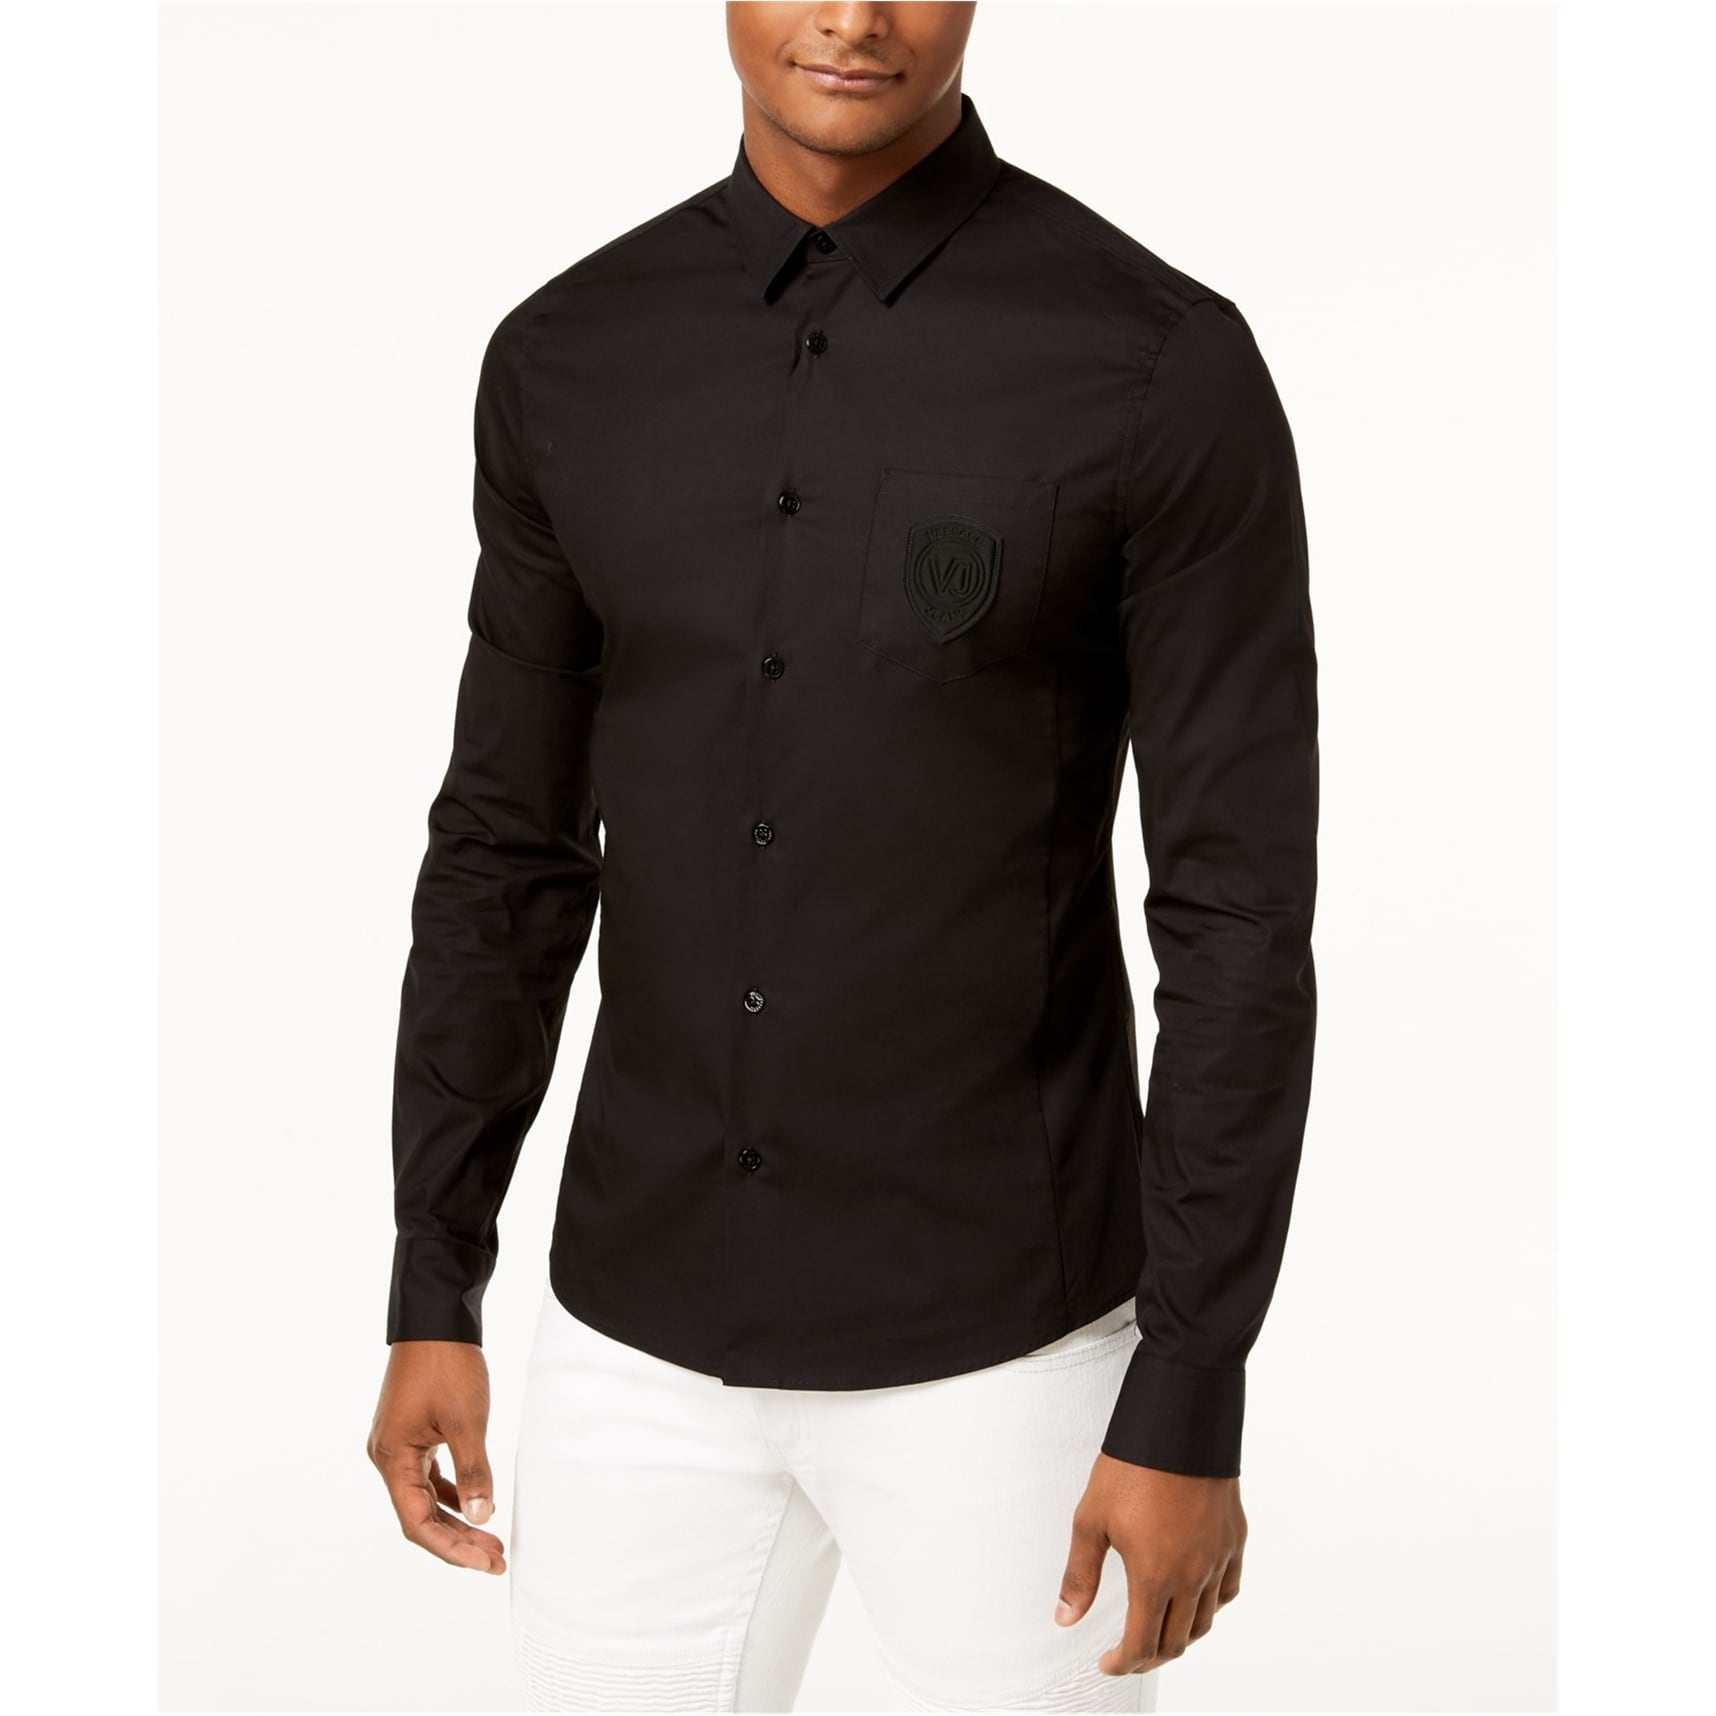 versace men's button up shirts